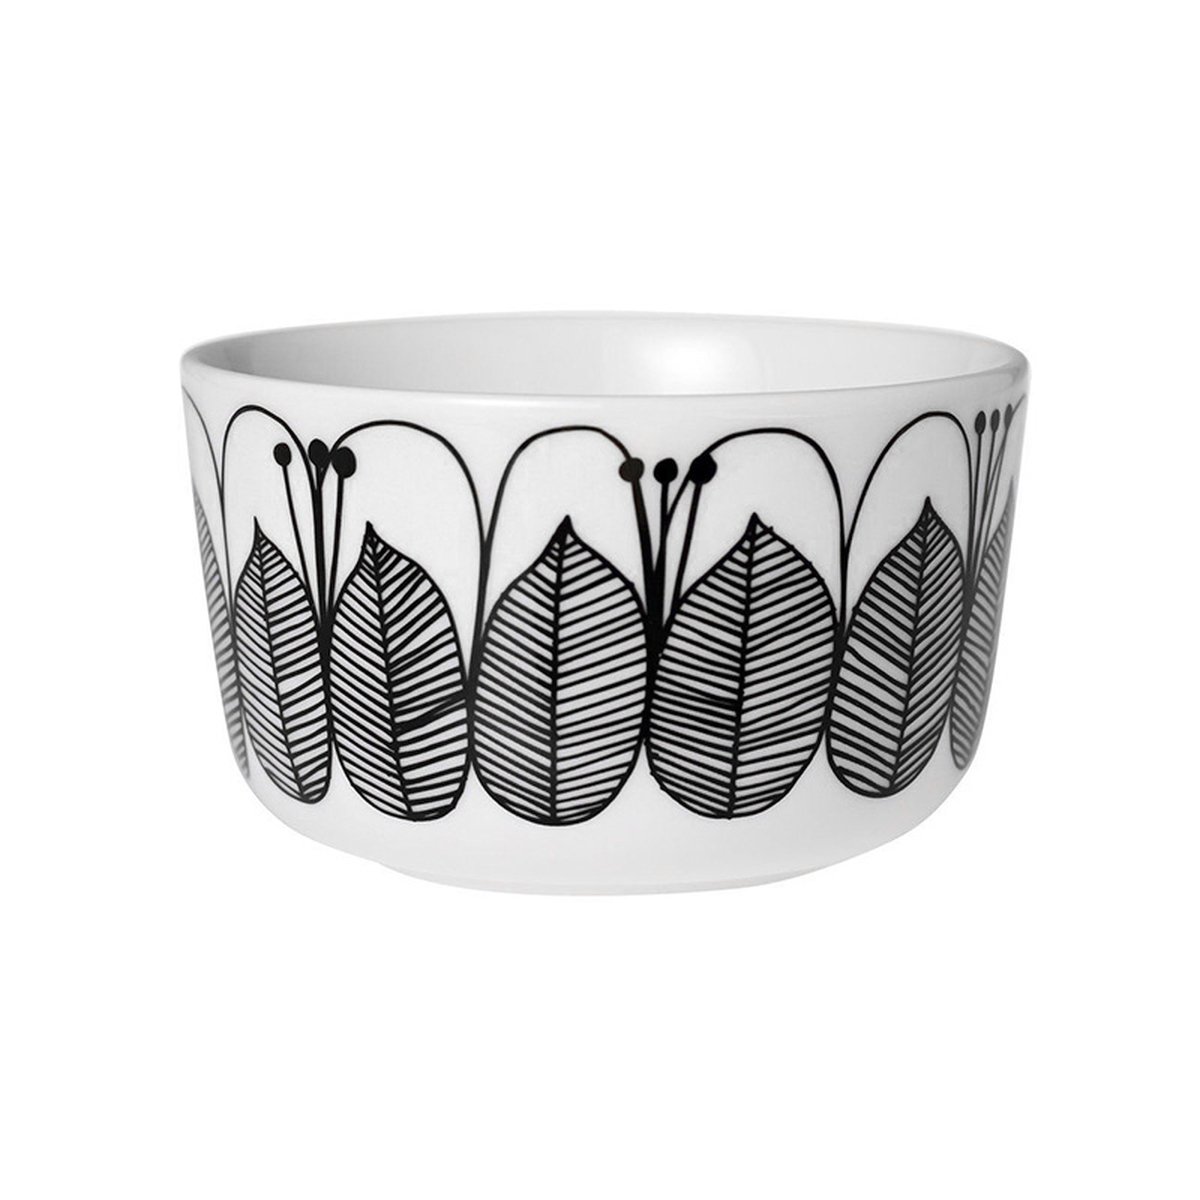 Marimekko Oiva - Kestit bowl 2,5 dl, black and white | Pre-used design |  Franckly